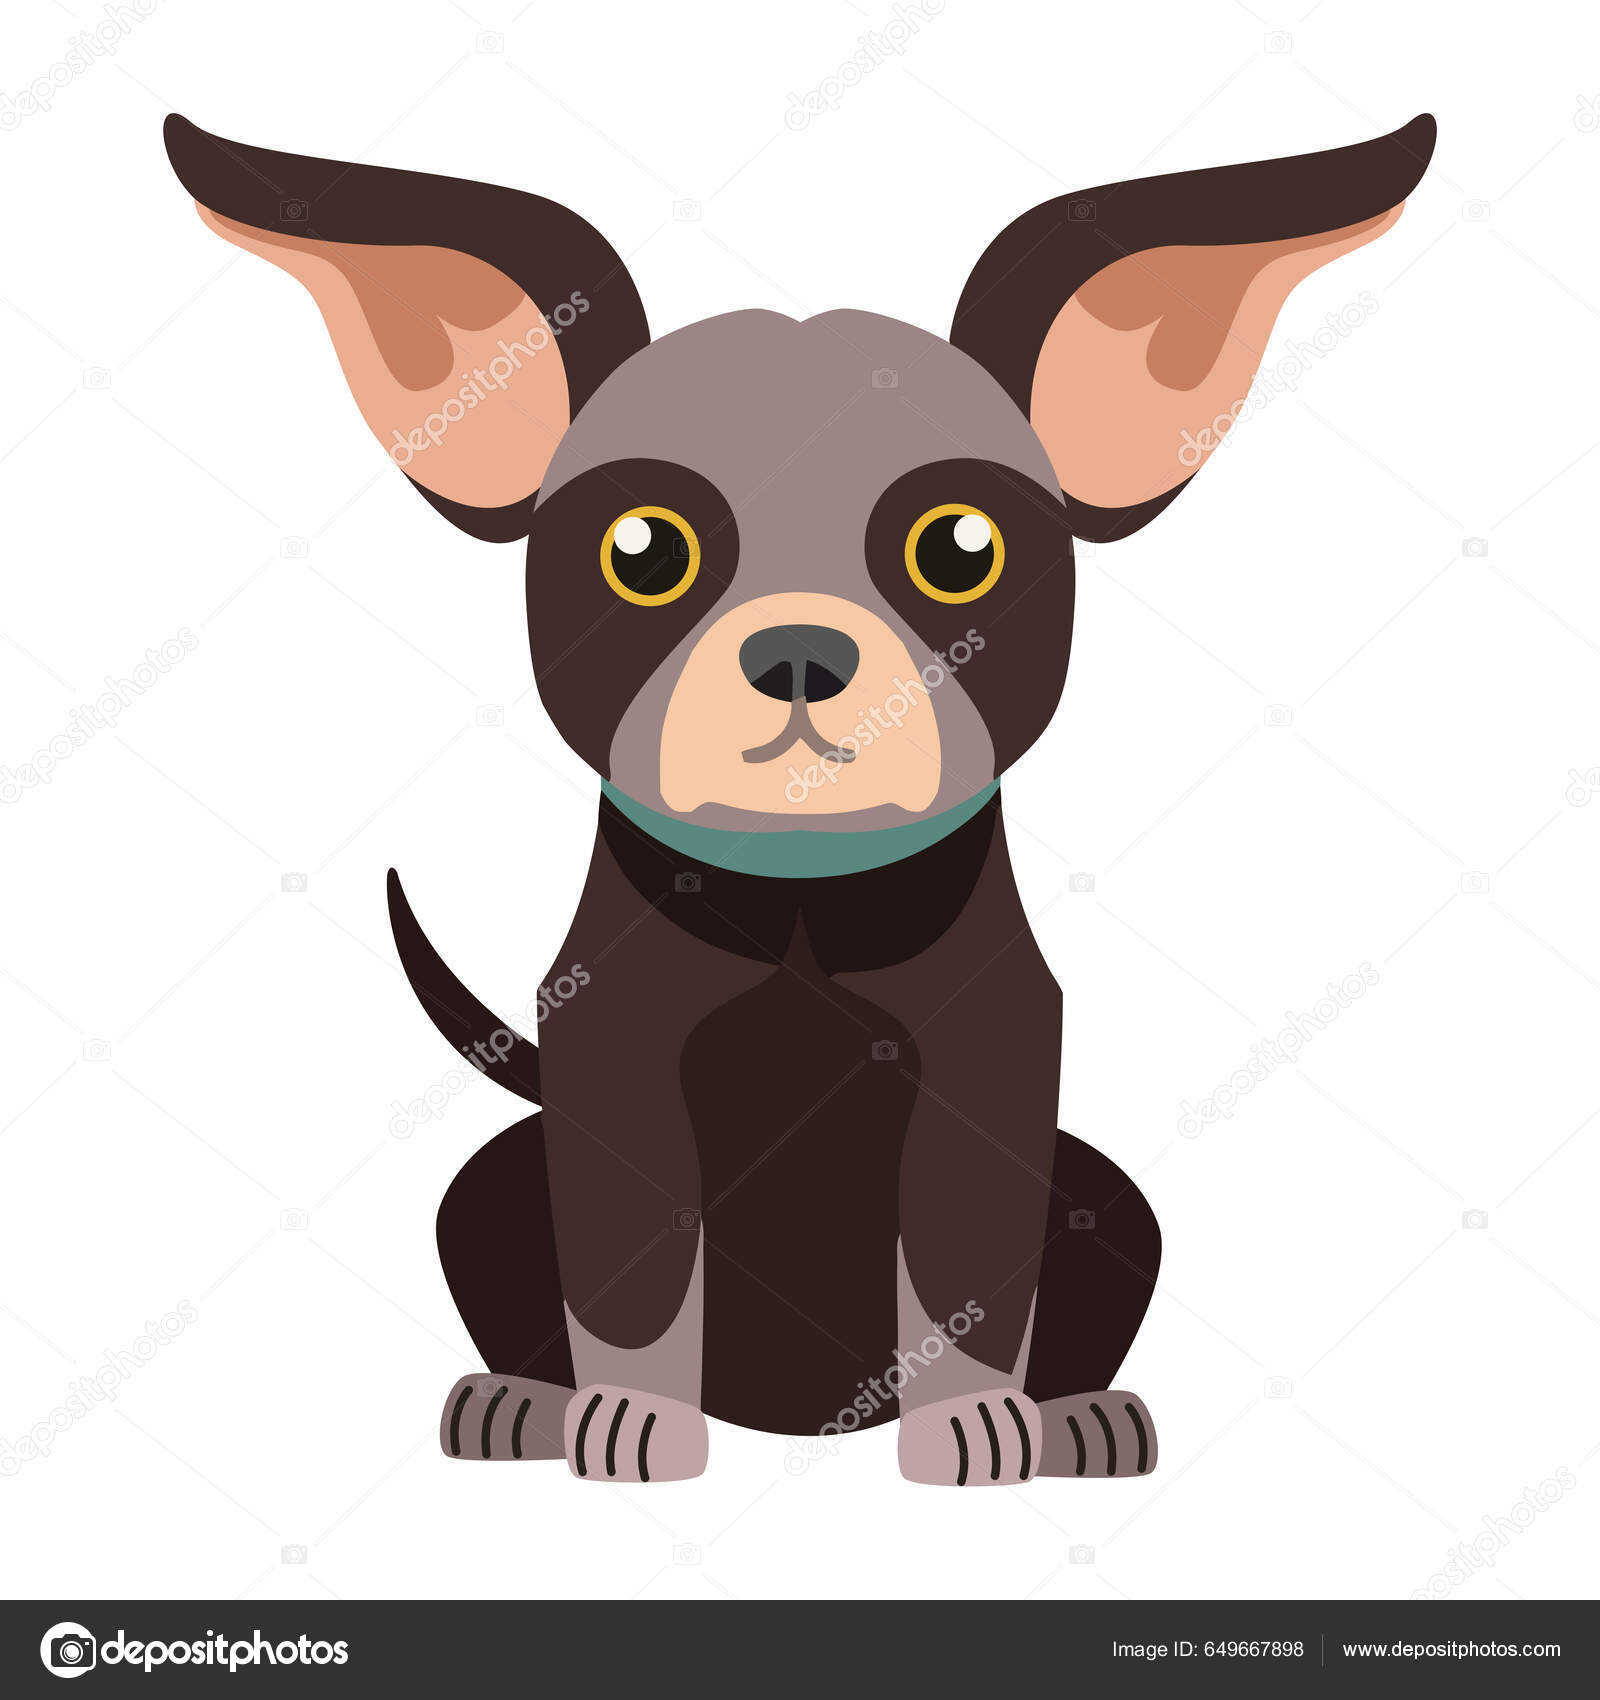 Chihuahua images vectorielles, Chihuahua vecteurs libres de droits |  Depositphotos